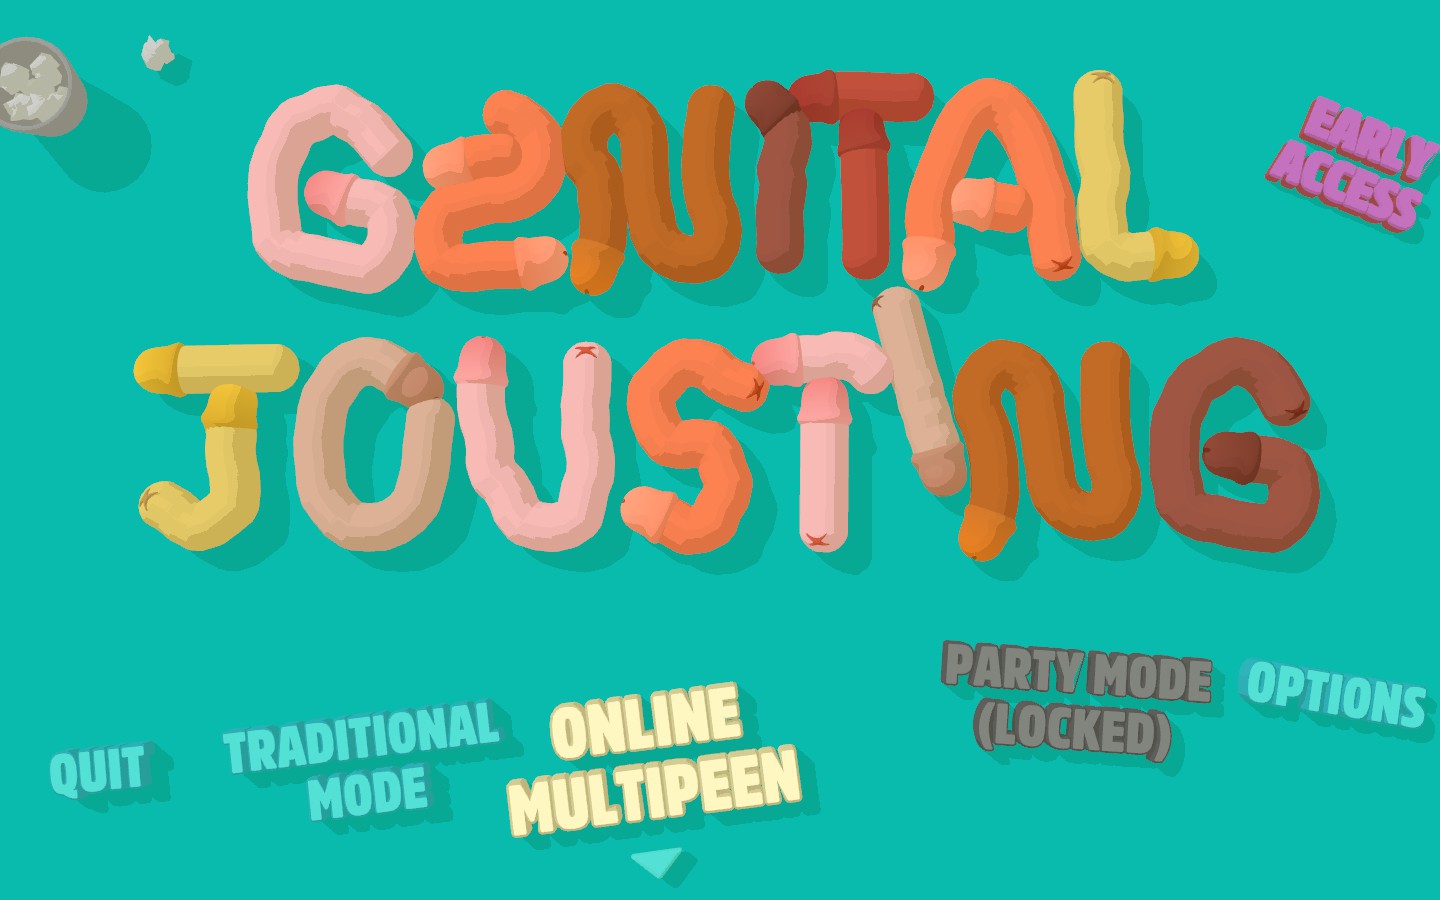 genital jousting single player